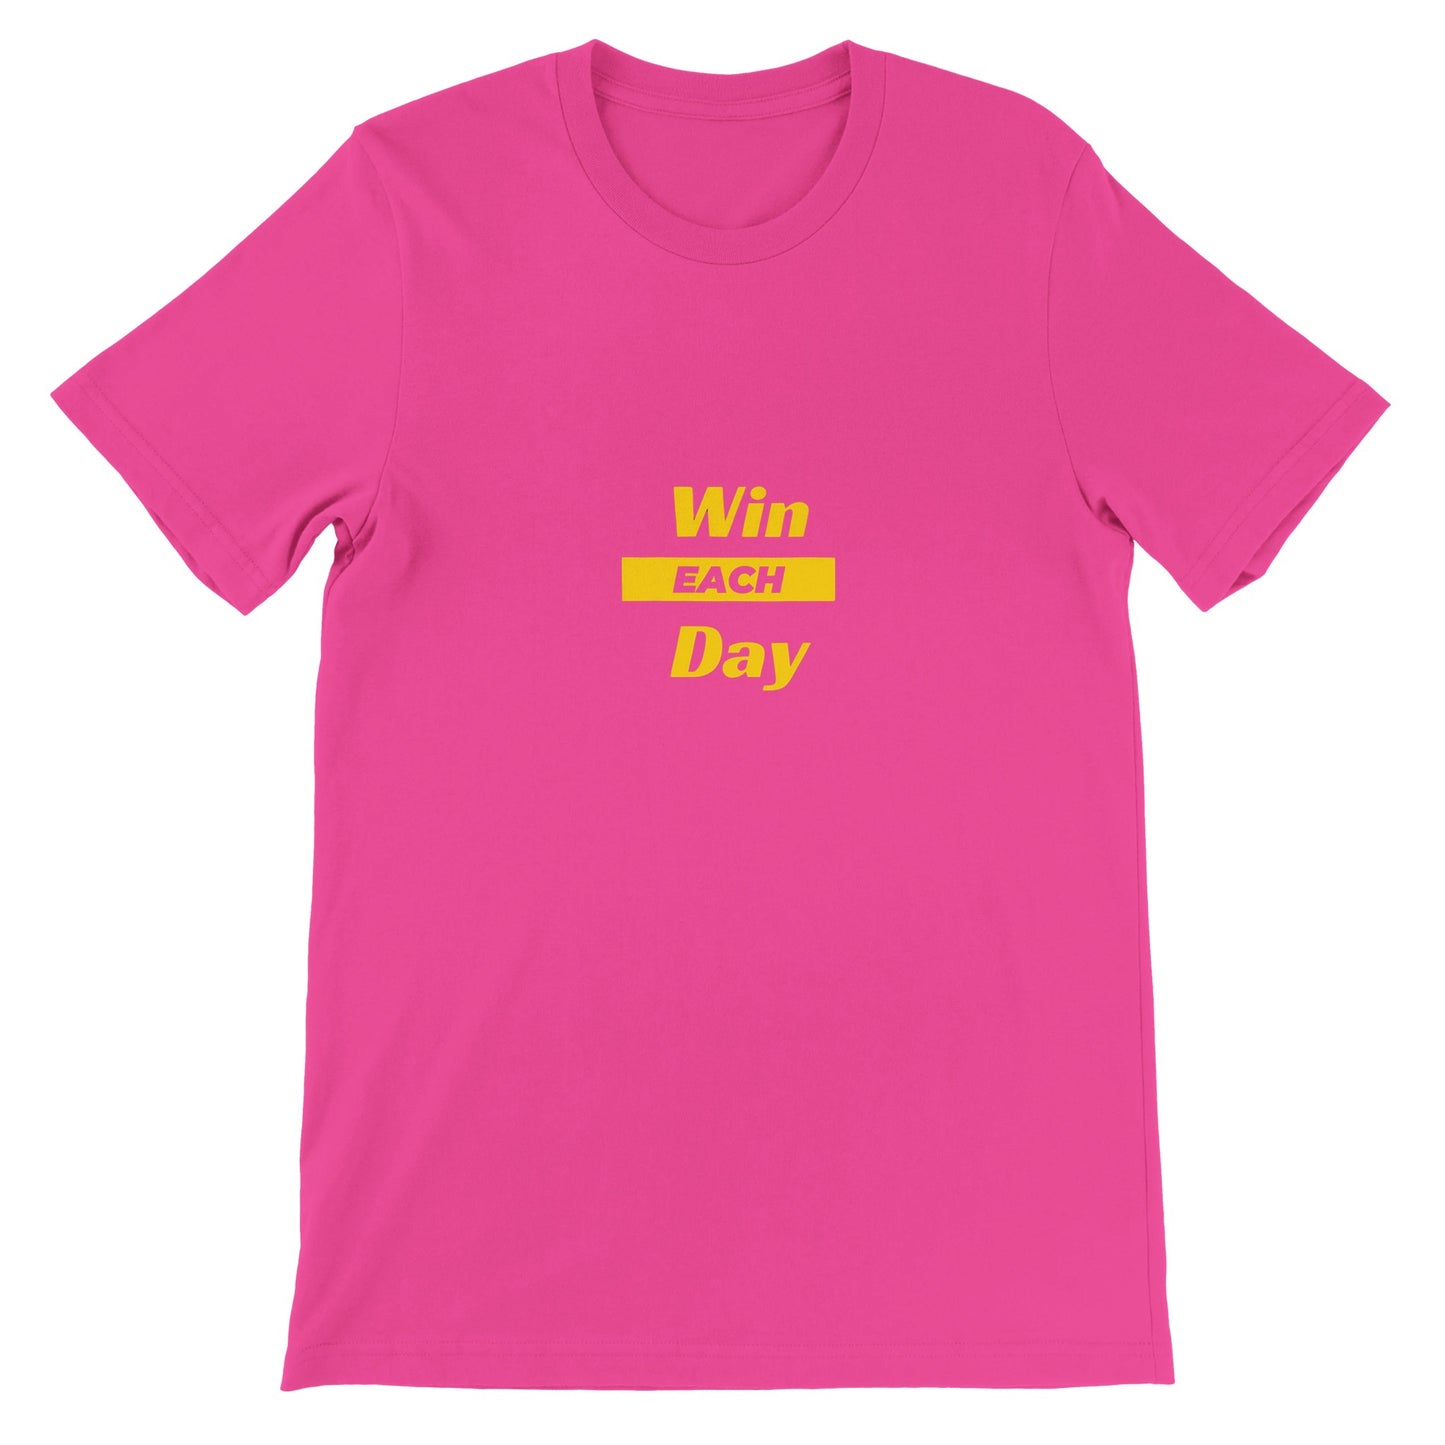 Win Each Day Premium T-Shirt Short Sleeve